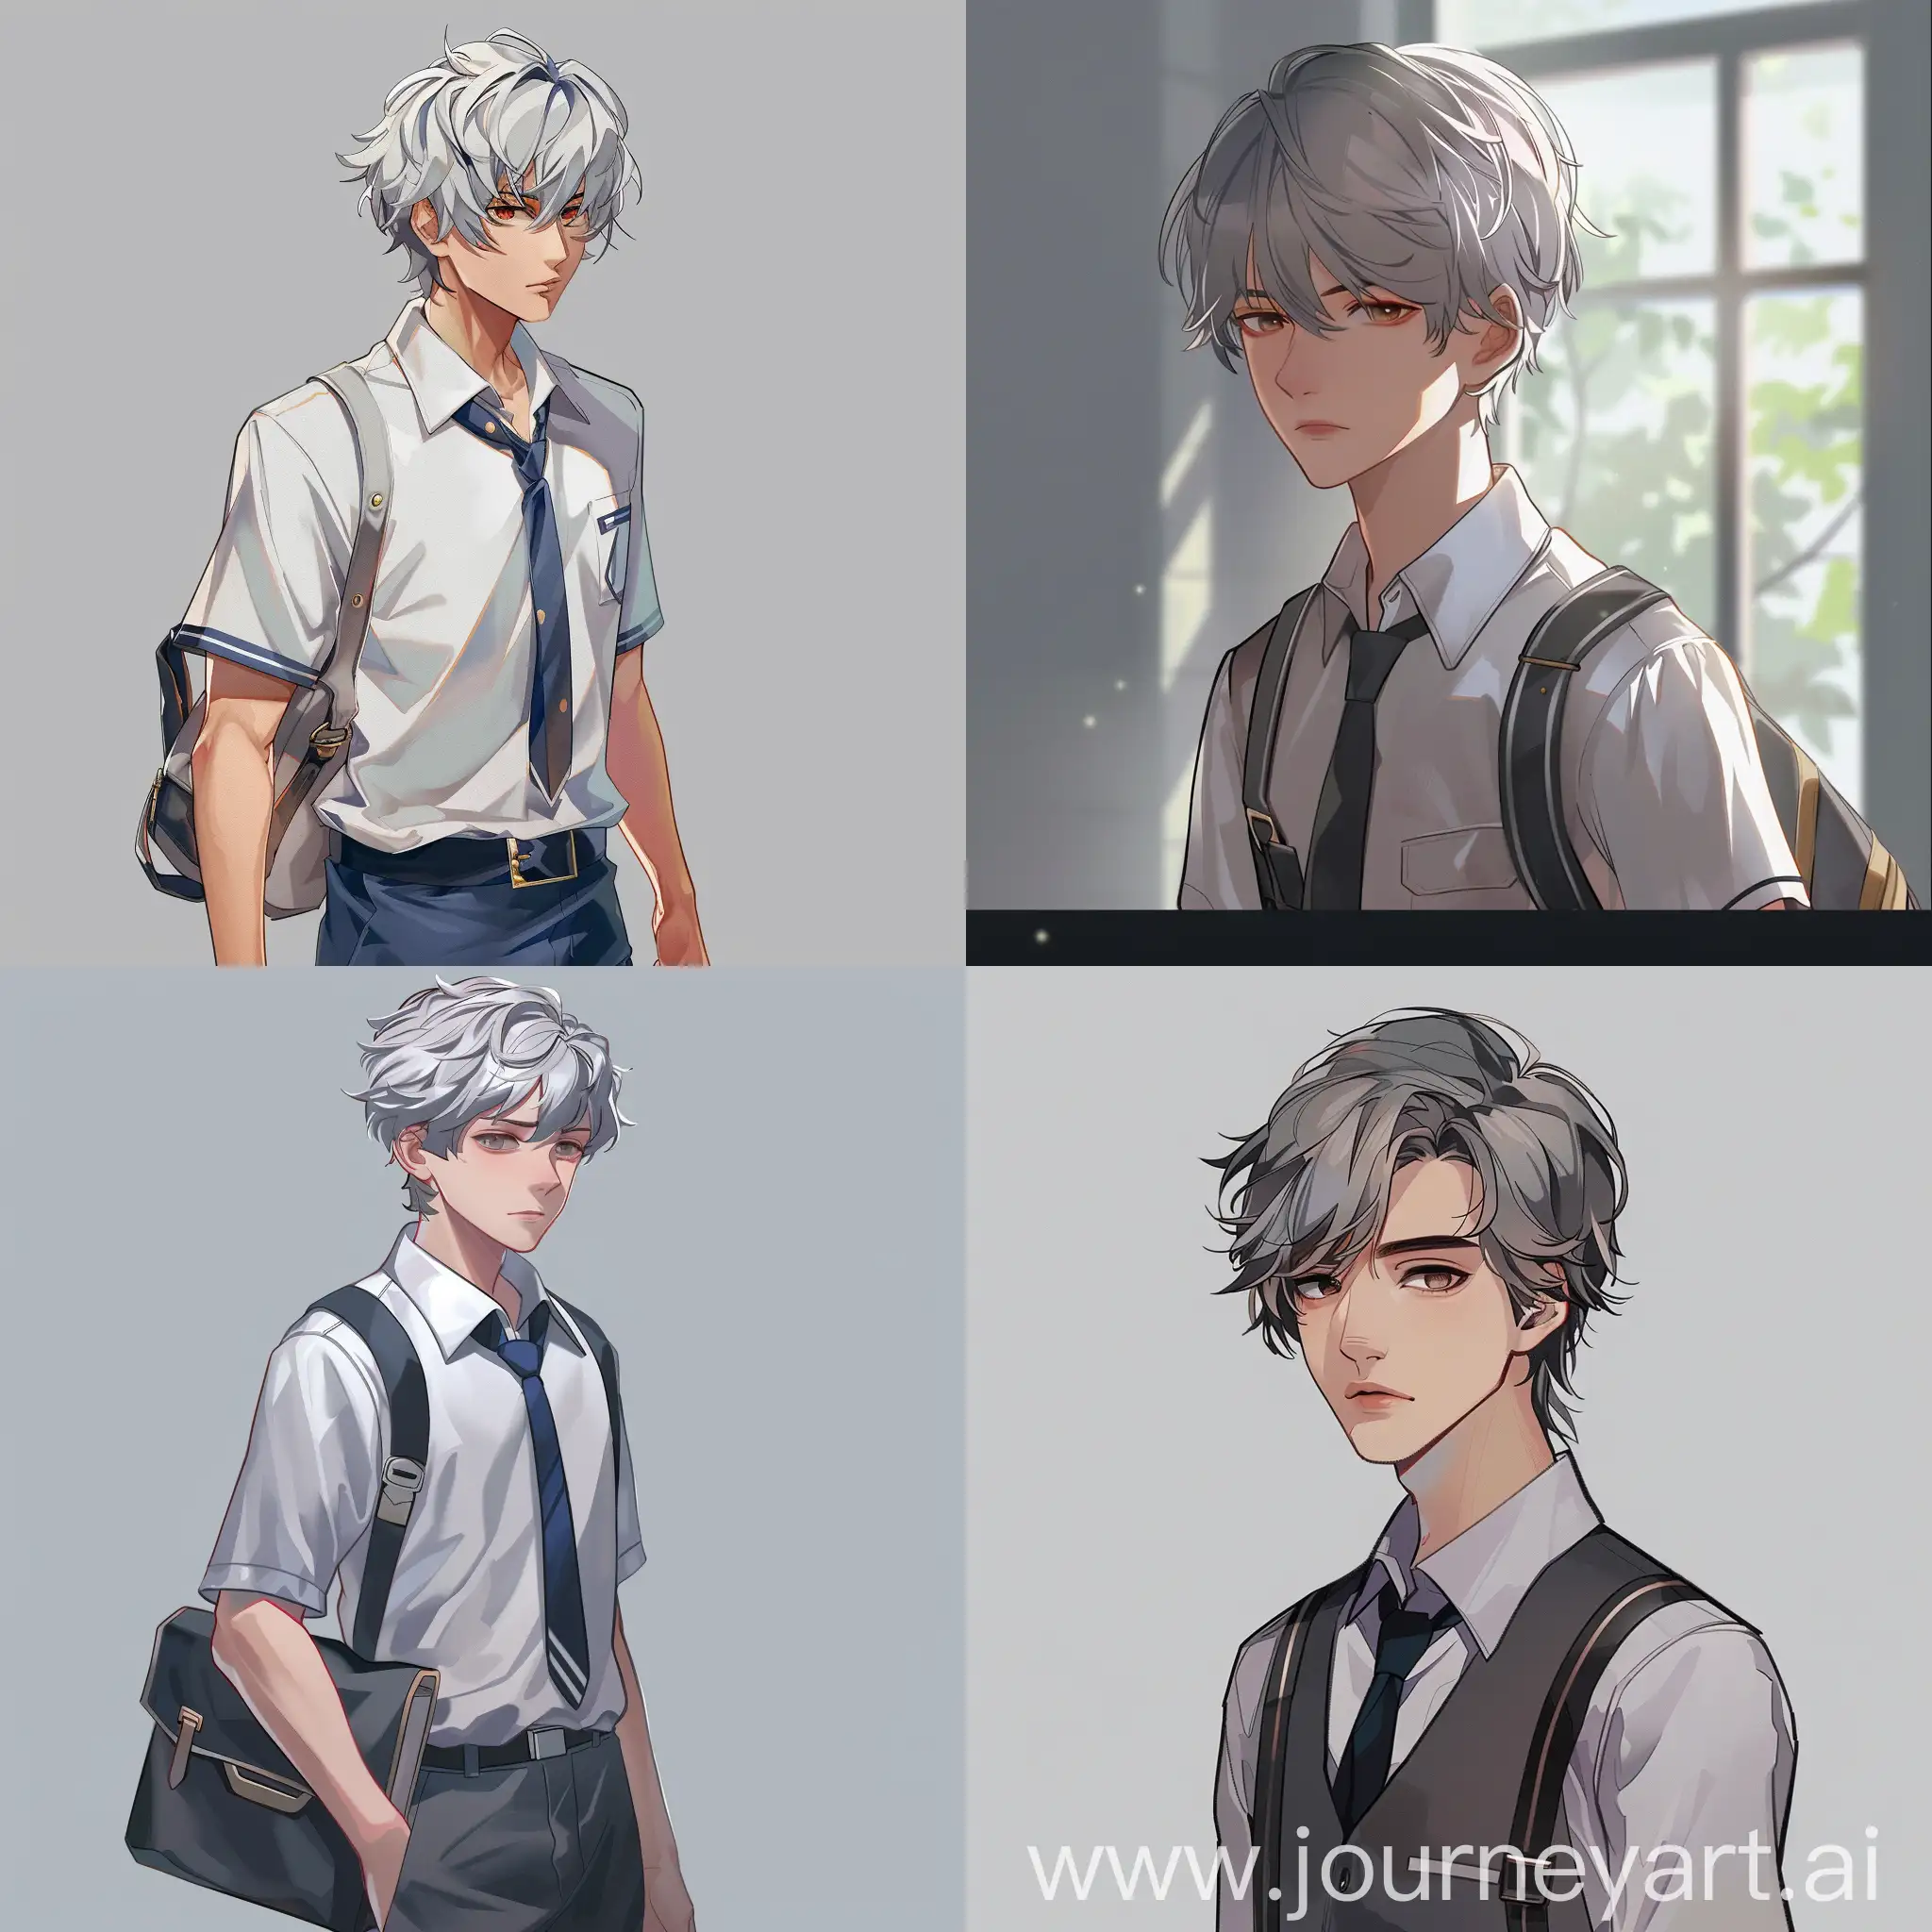 Student-in-School-Uniform-with-Short-Grey-Hair